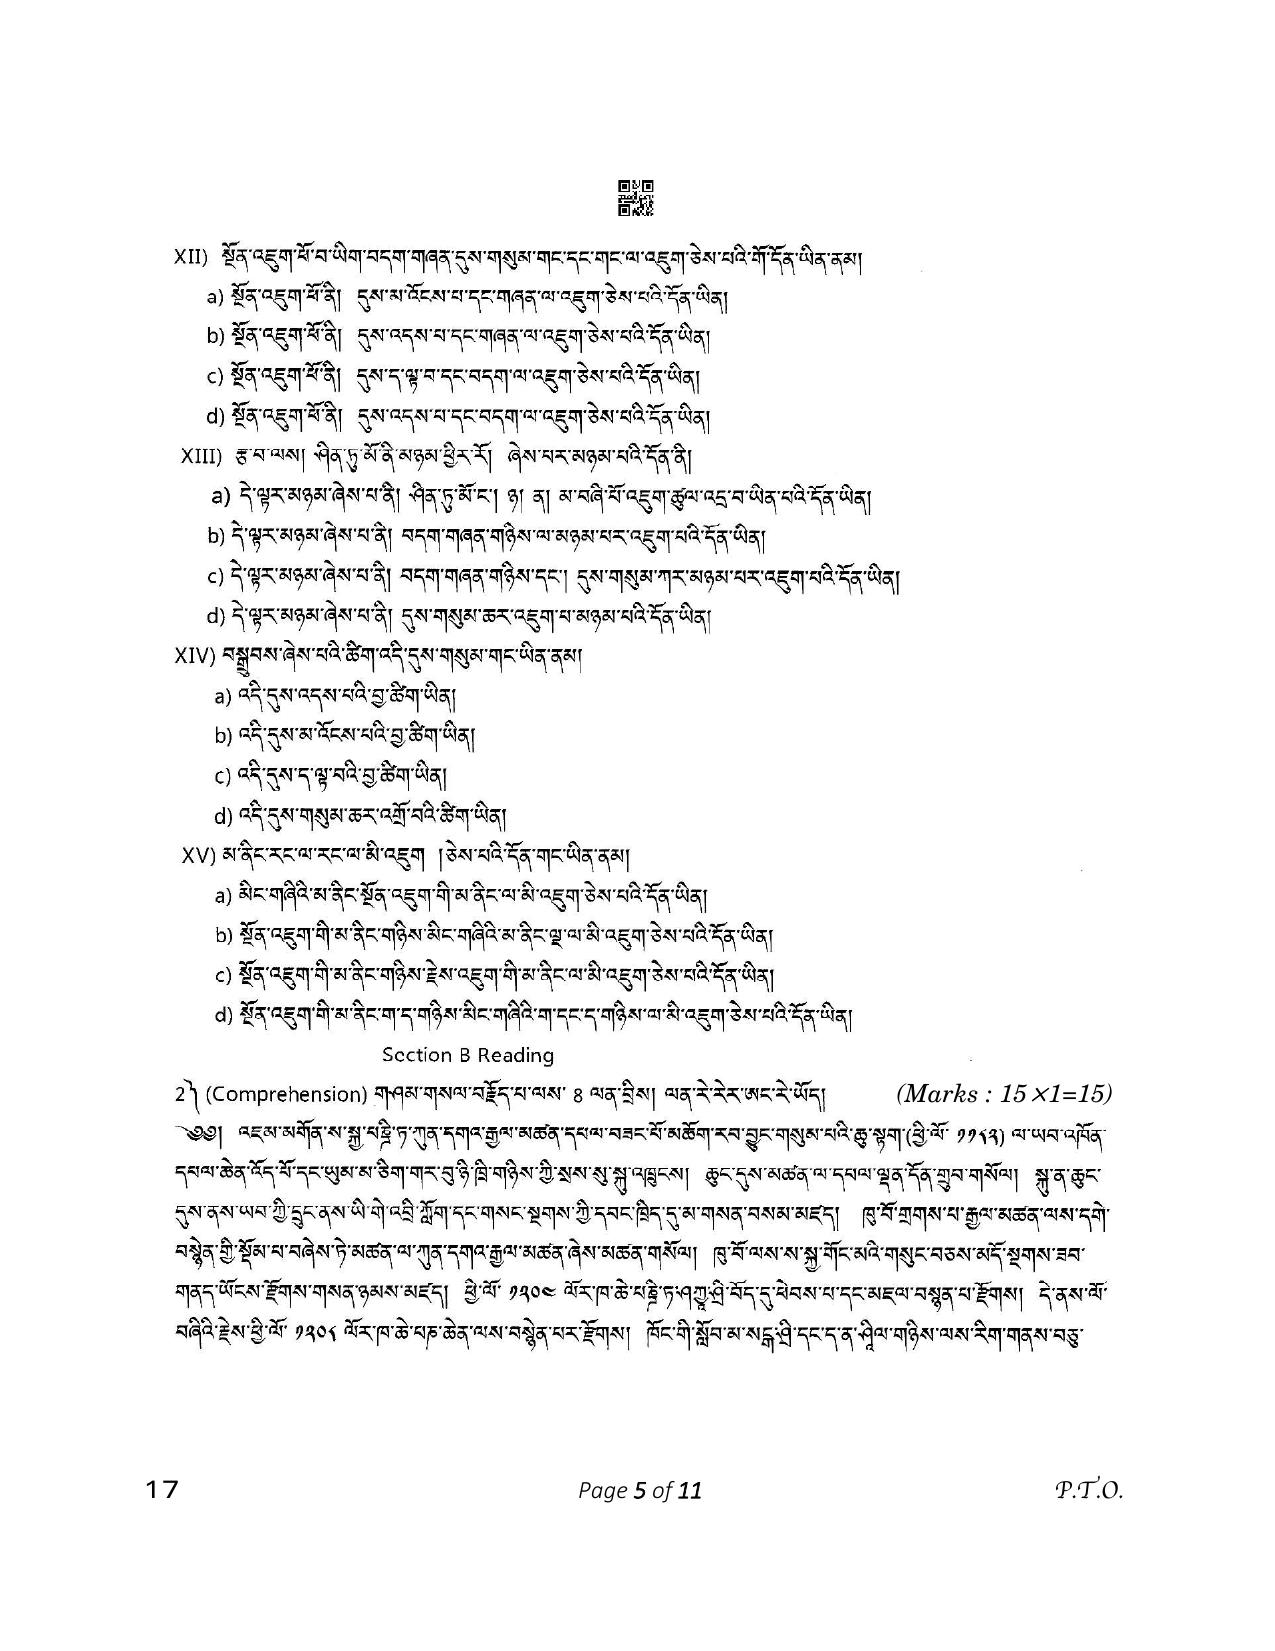 CBSE Class 12 17_Tibetan 2023 Question Paper - Page 5